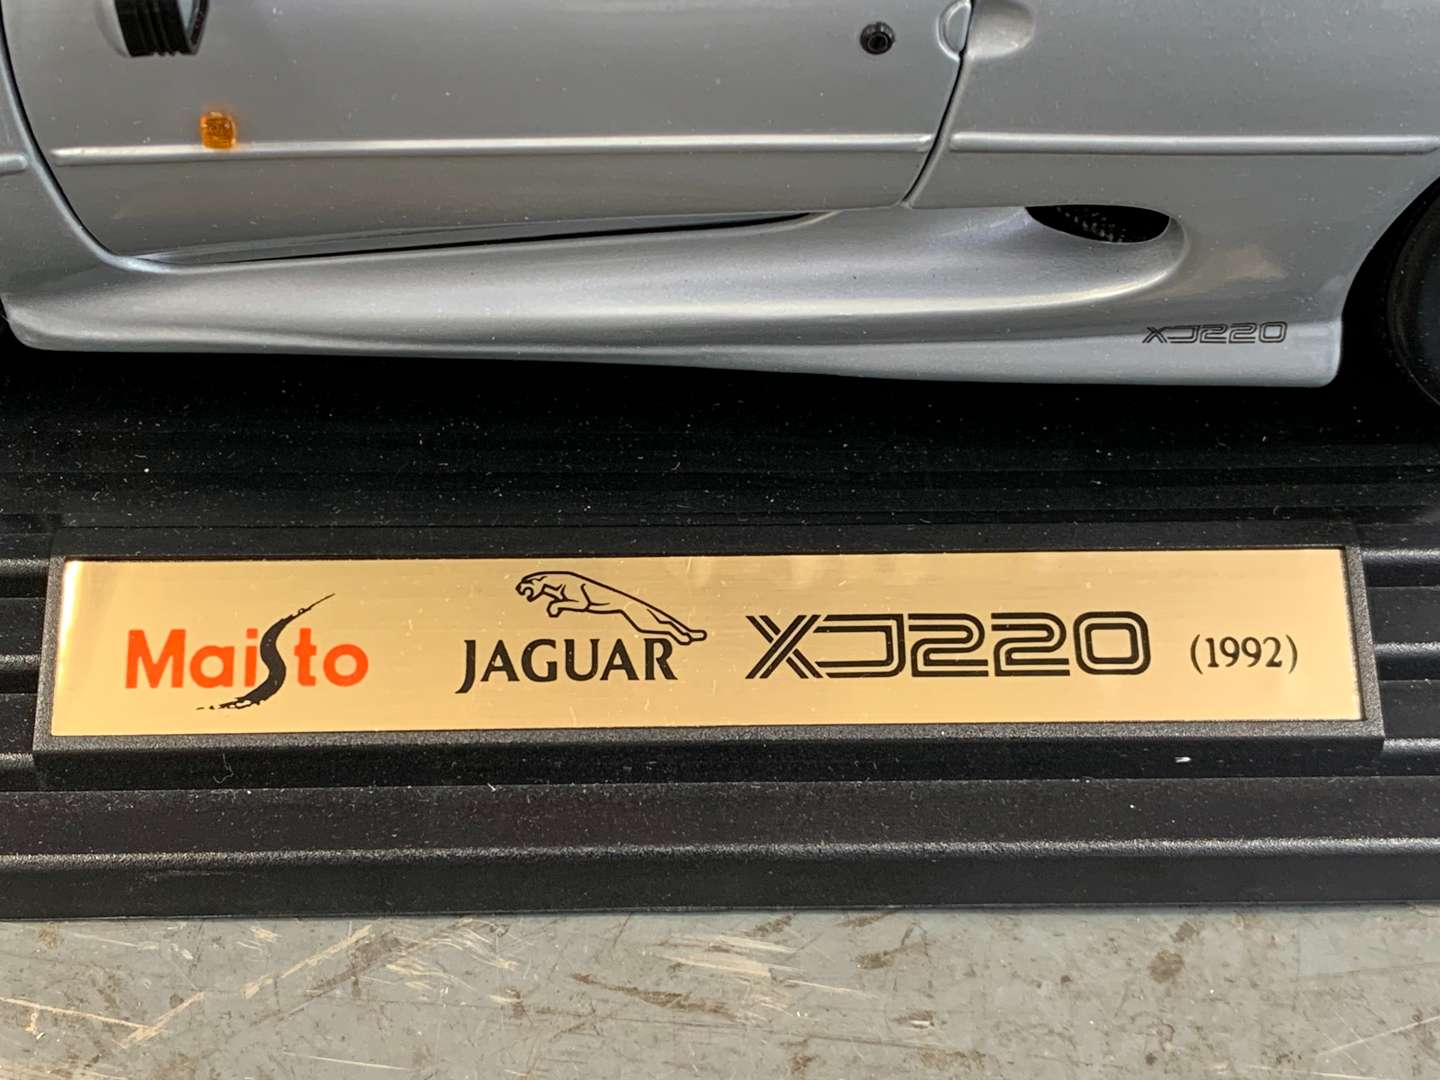 <p>Jaguar XJ220 1:12 Scale By Maisto</p>